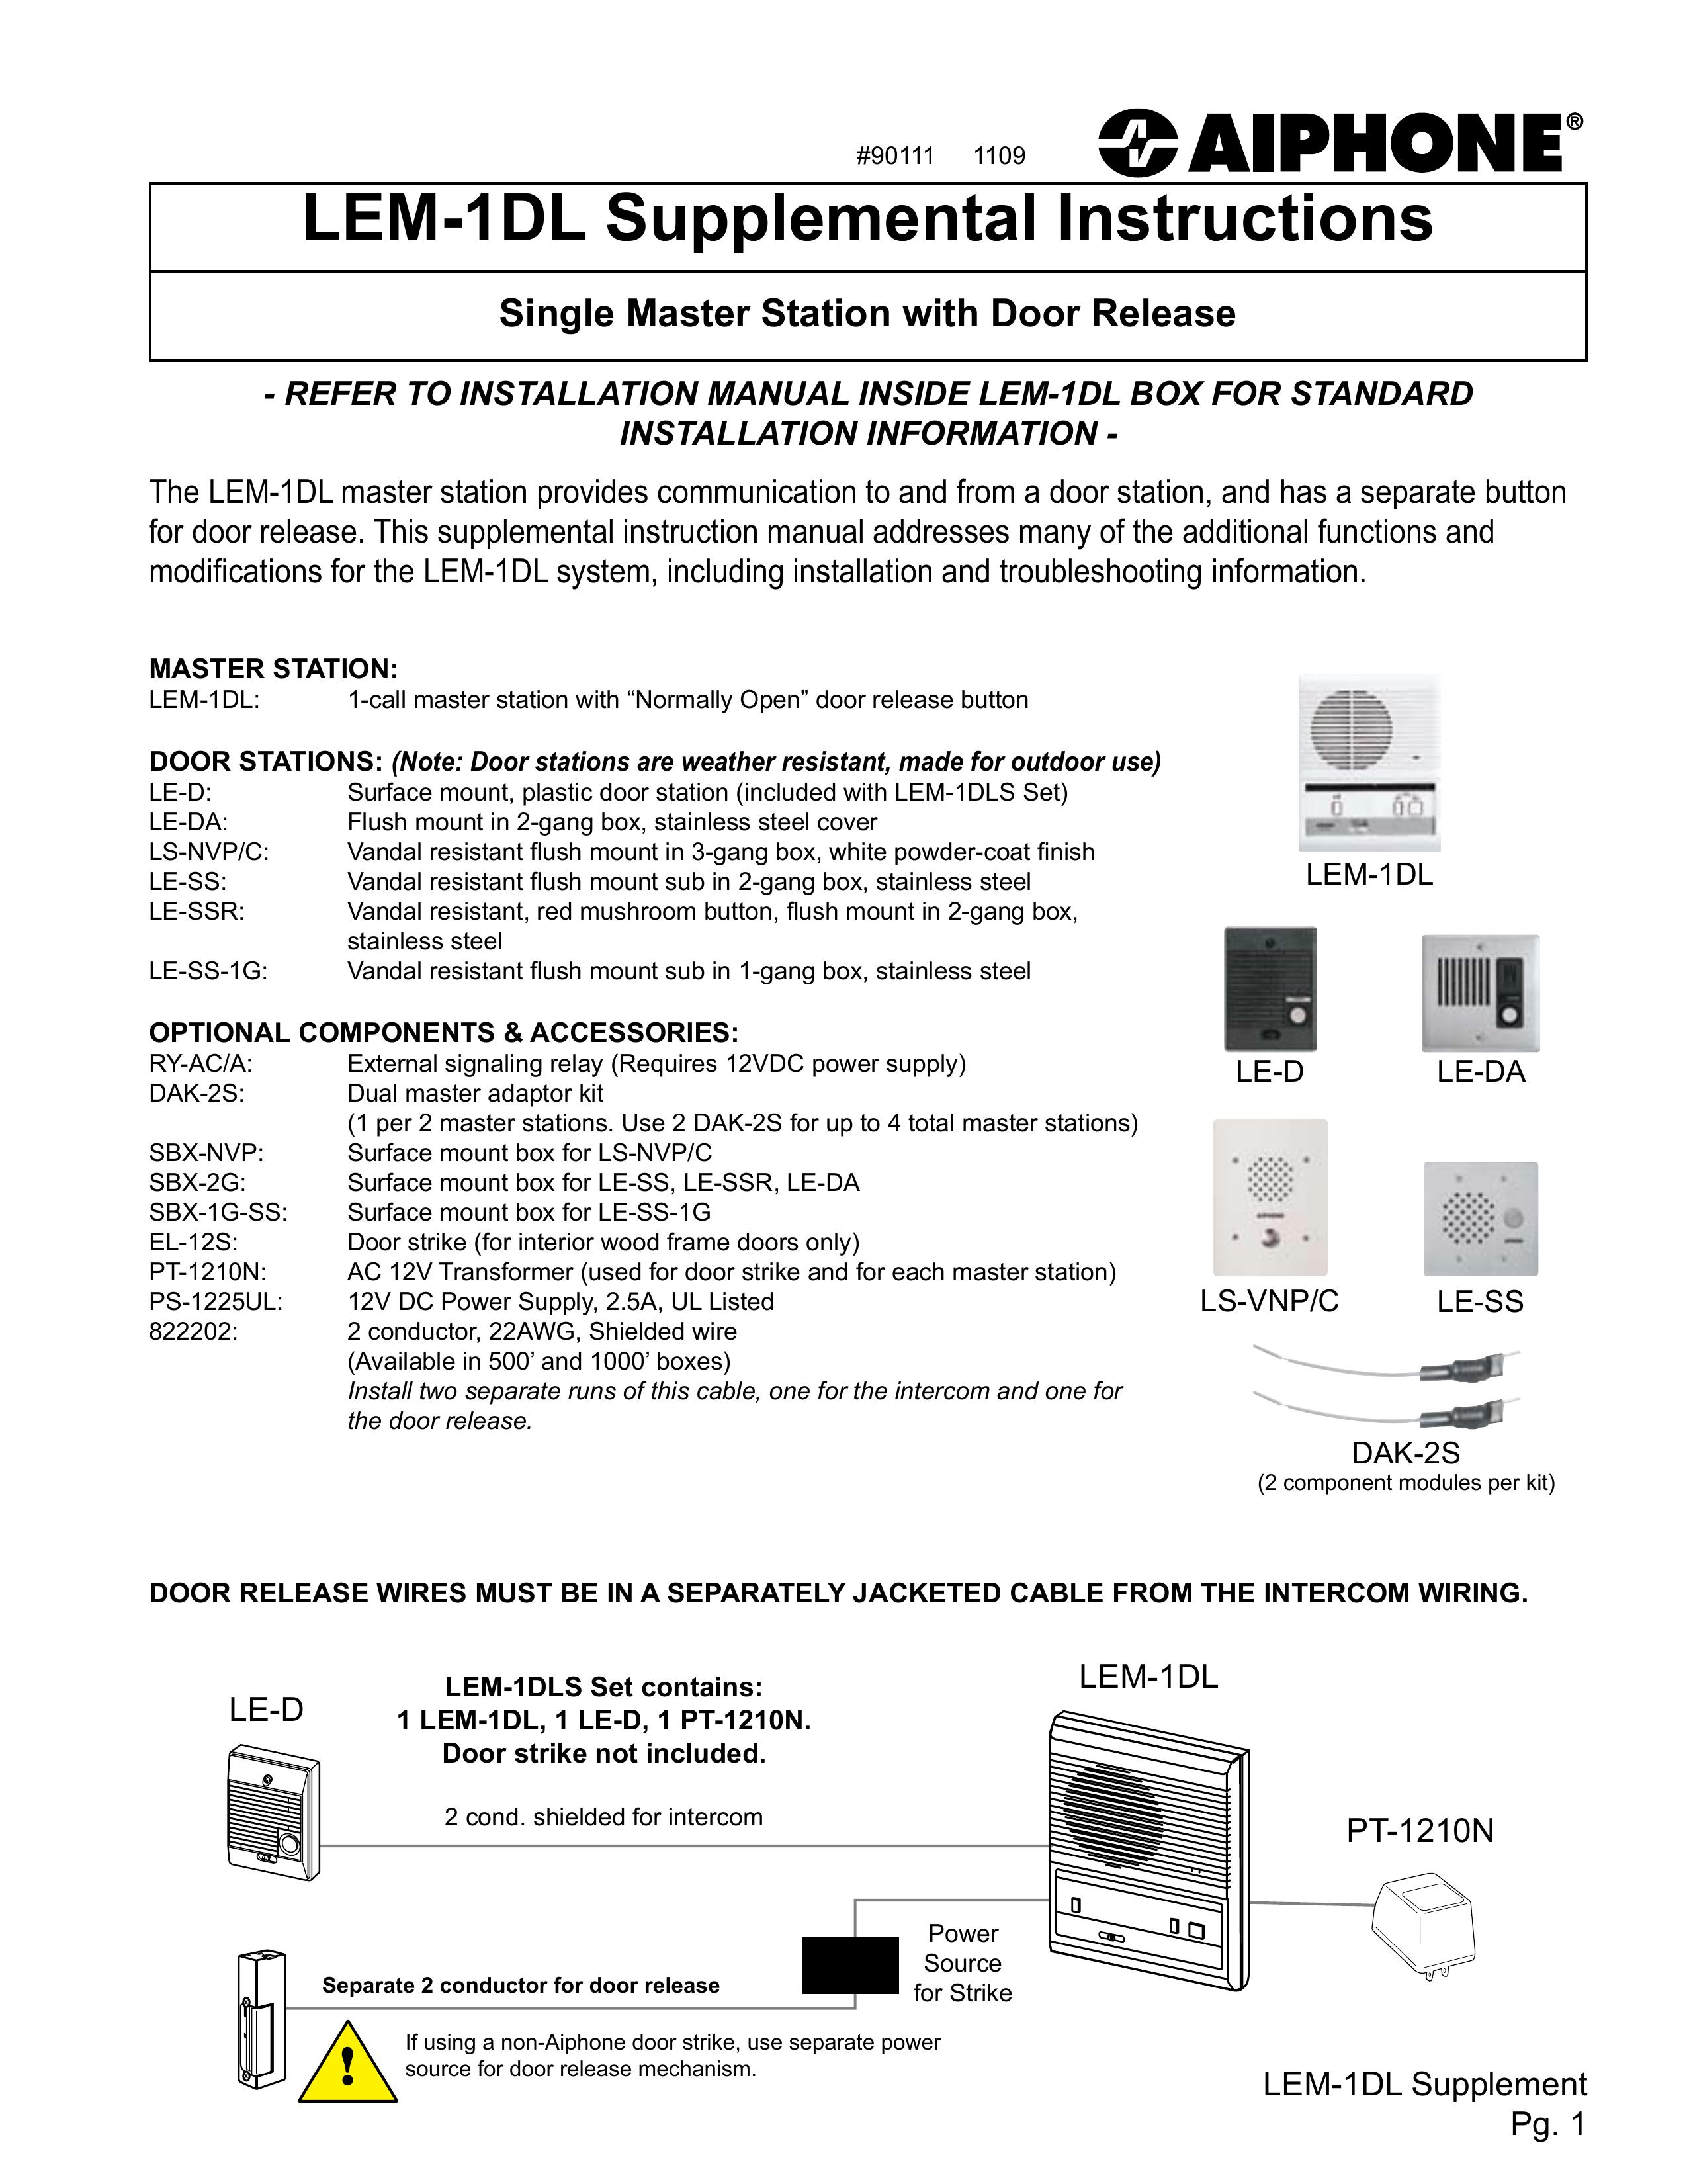 Aiphone LEM-1DL Film Camera User Manual